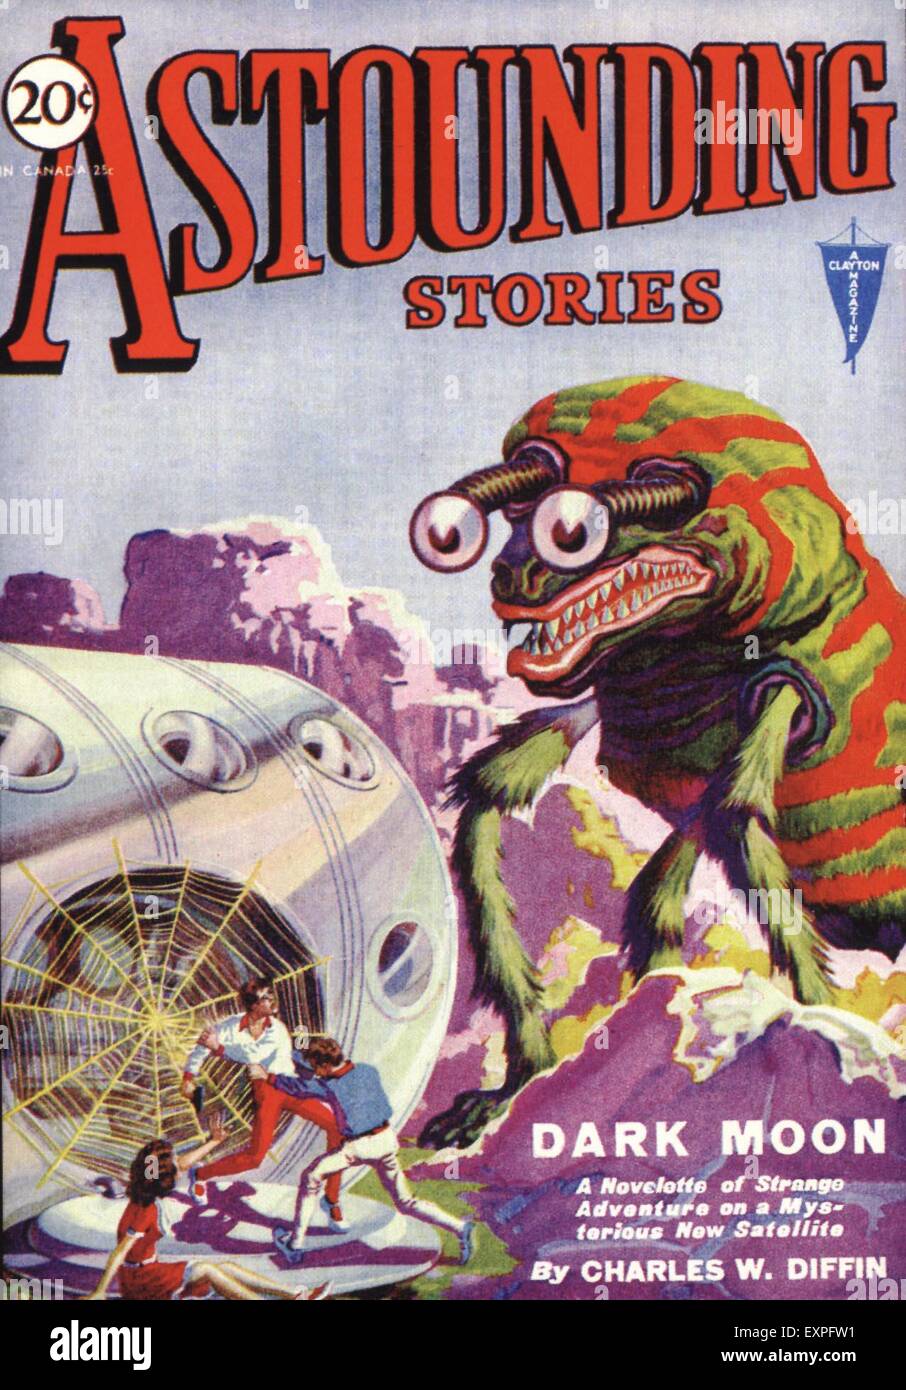 1940s USA Astounding Stories Magazine Cover Stock Photo